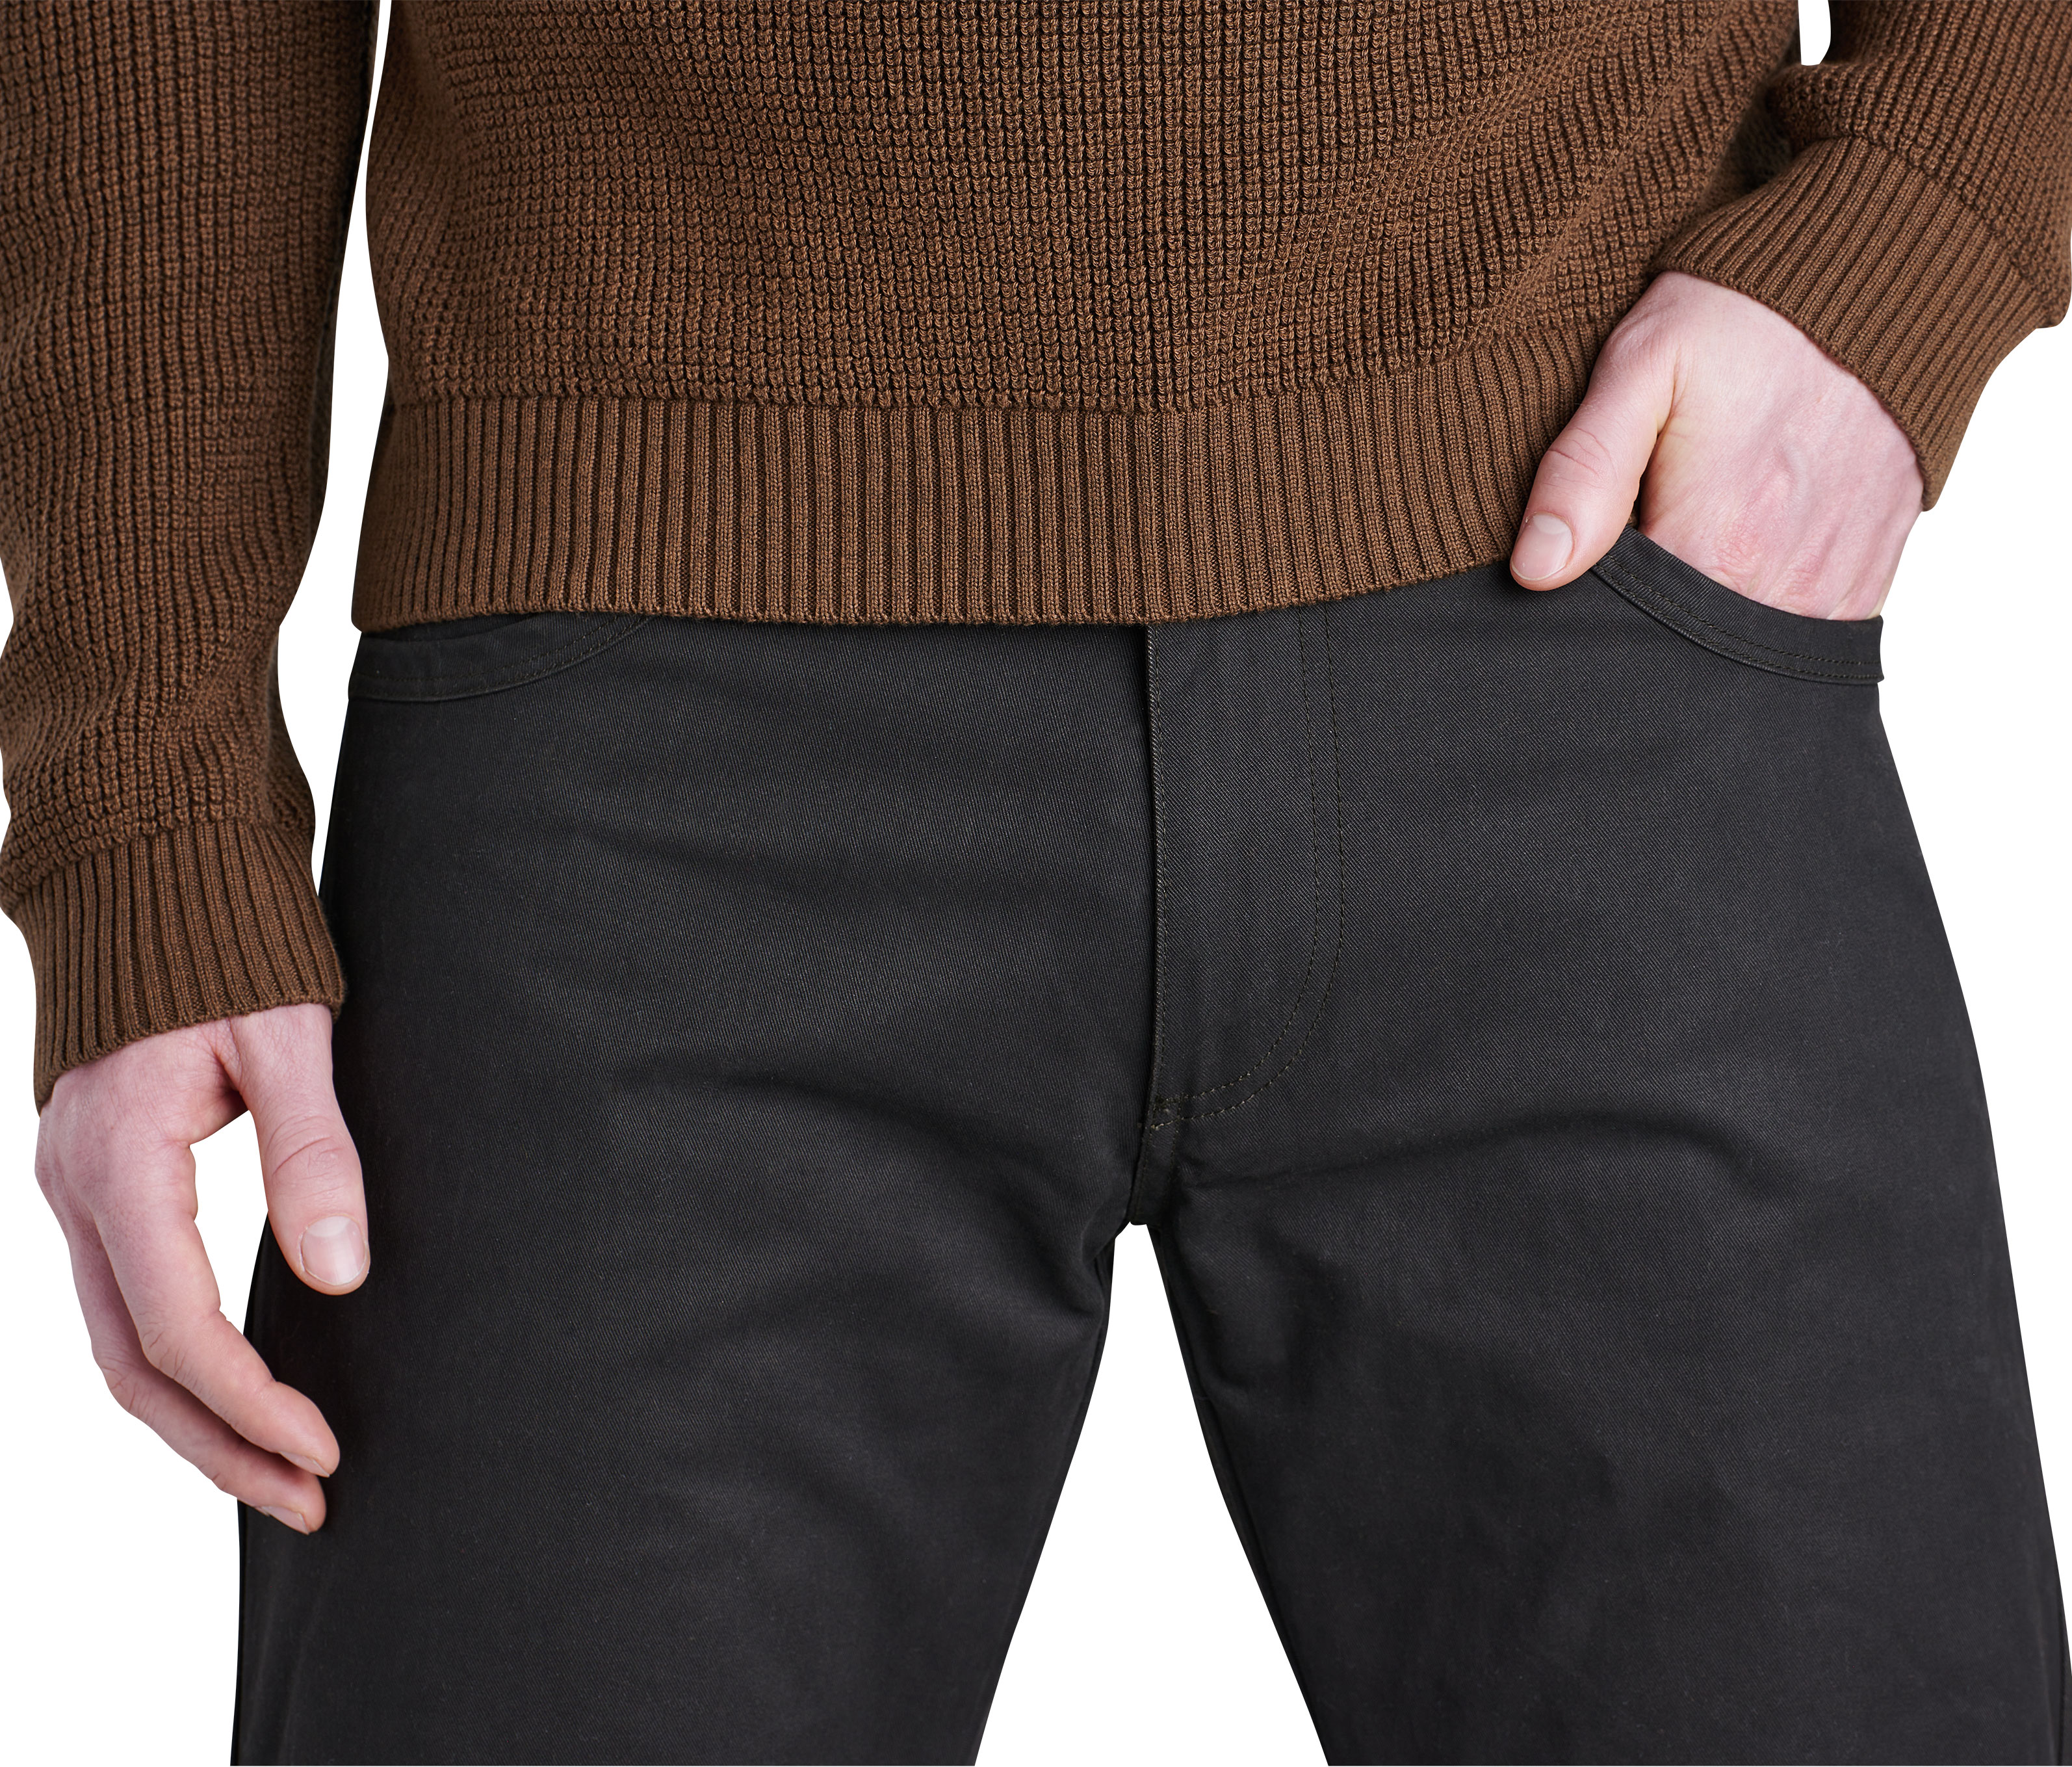  Kuhl Rydr Men's Pant - Dark Khaki 40W x 32L : Clothing